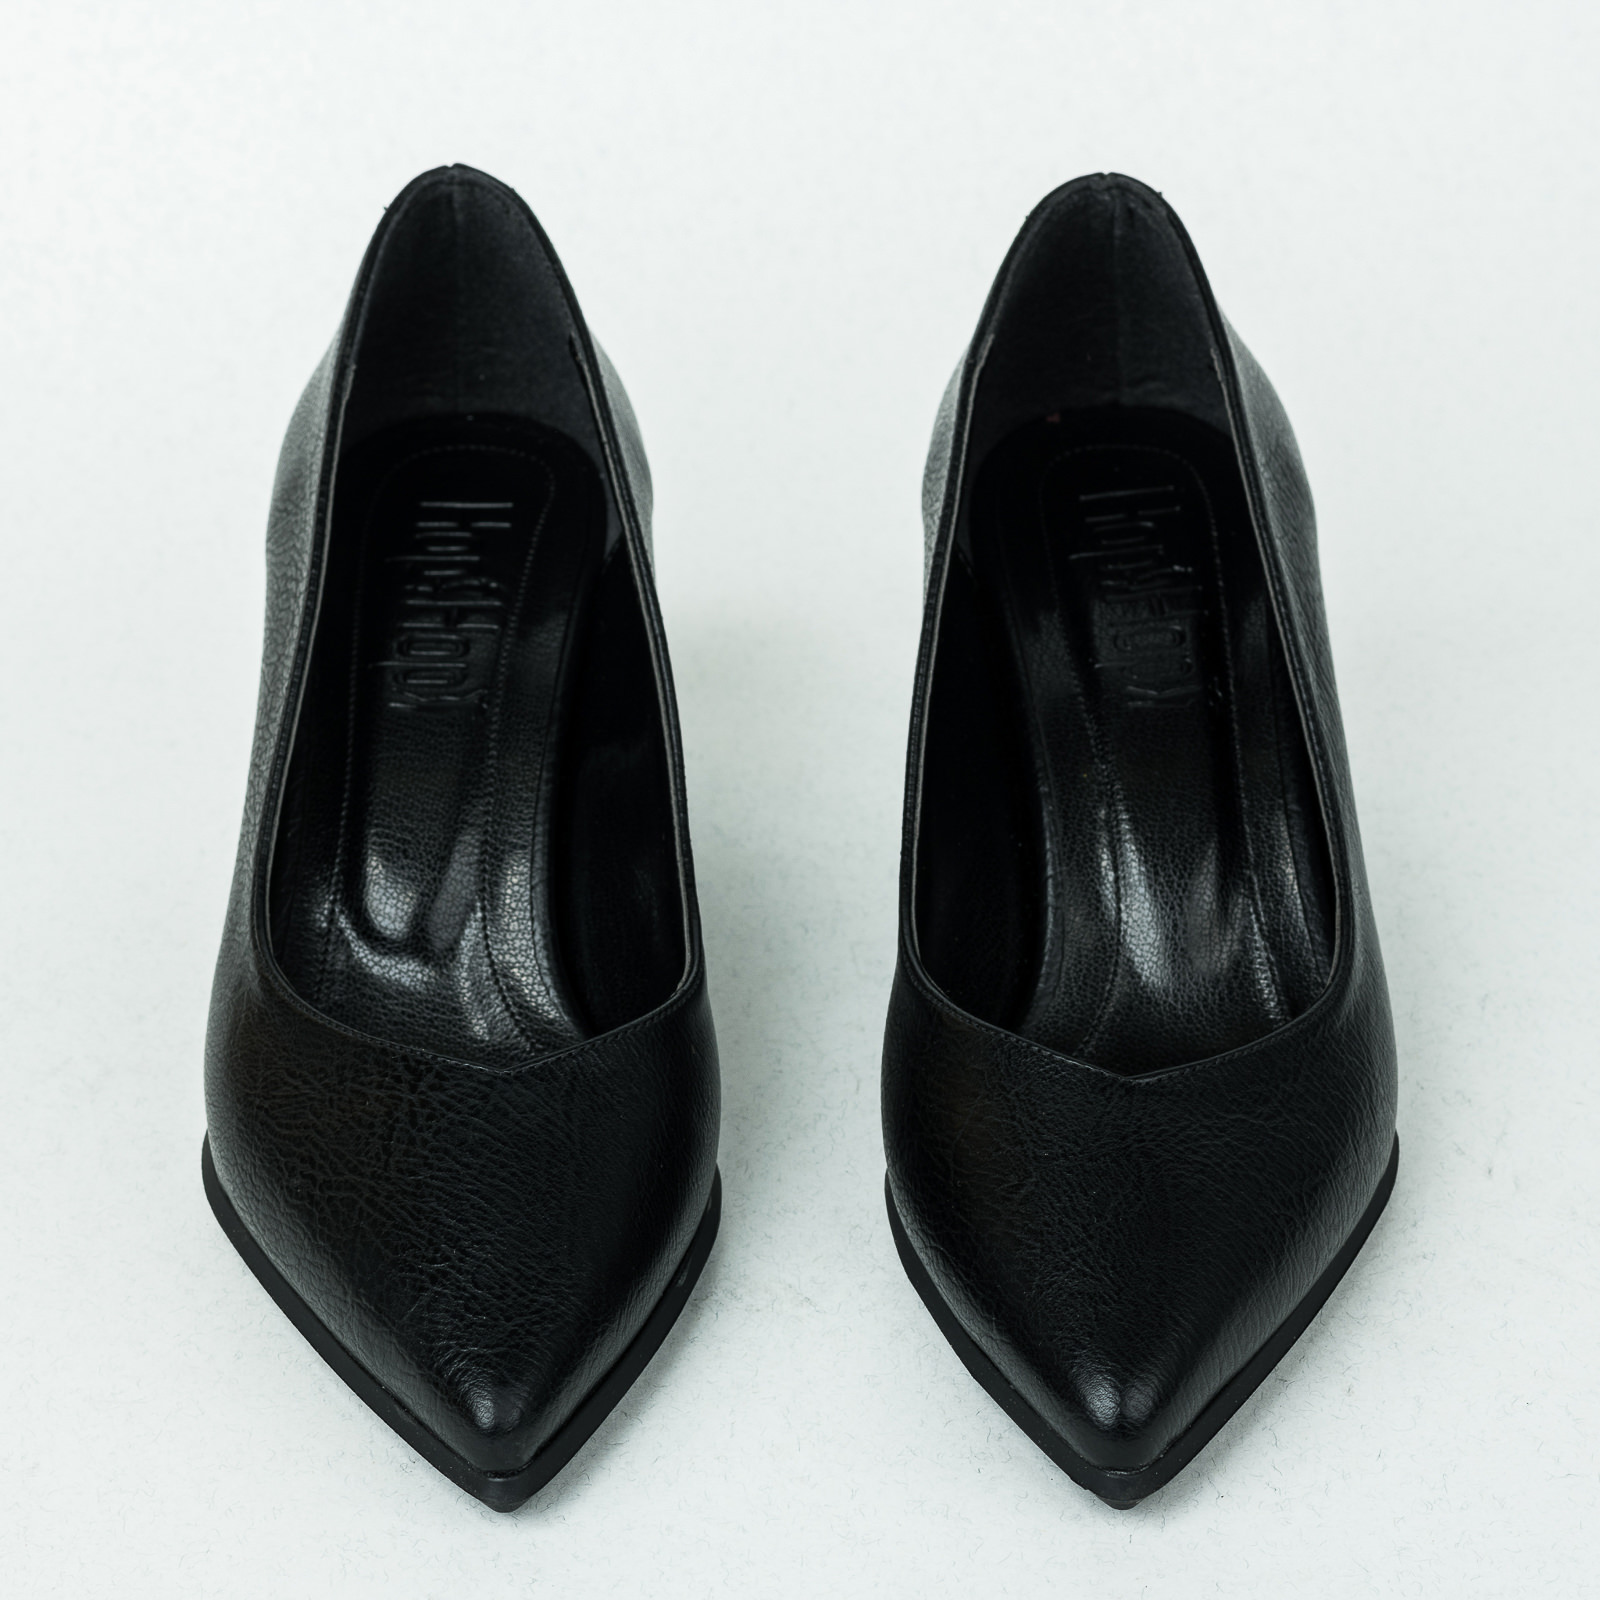 High-heels B257 - BLACK